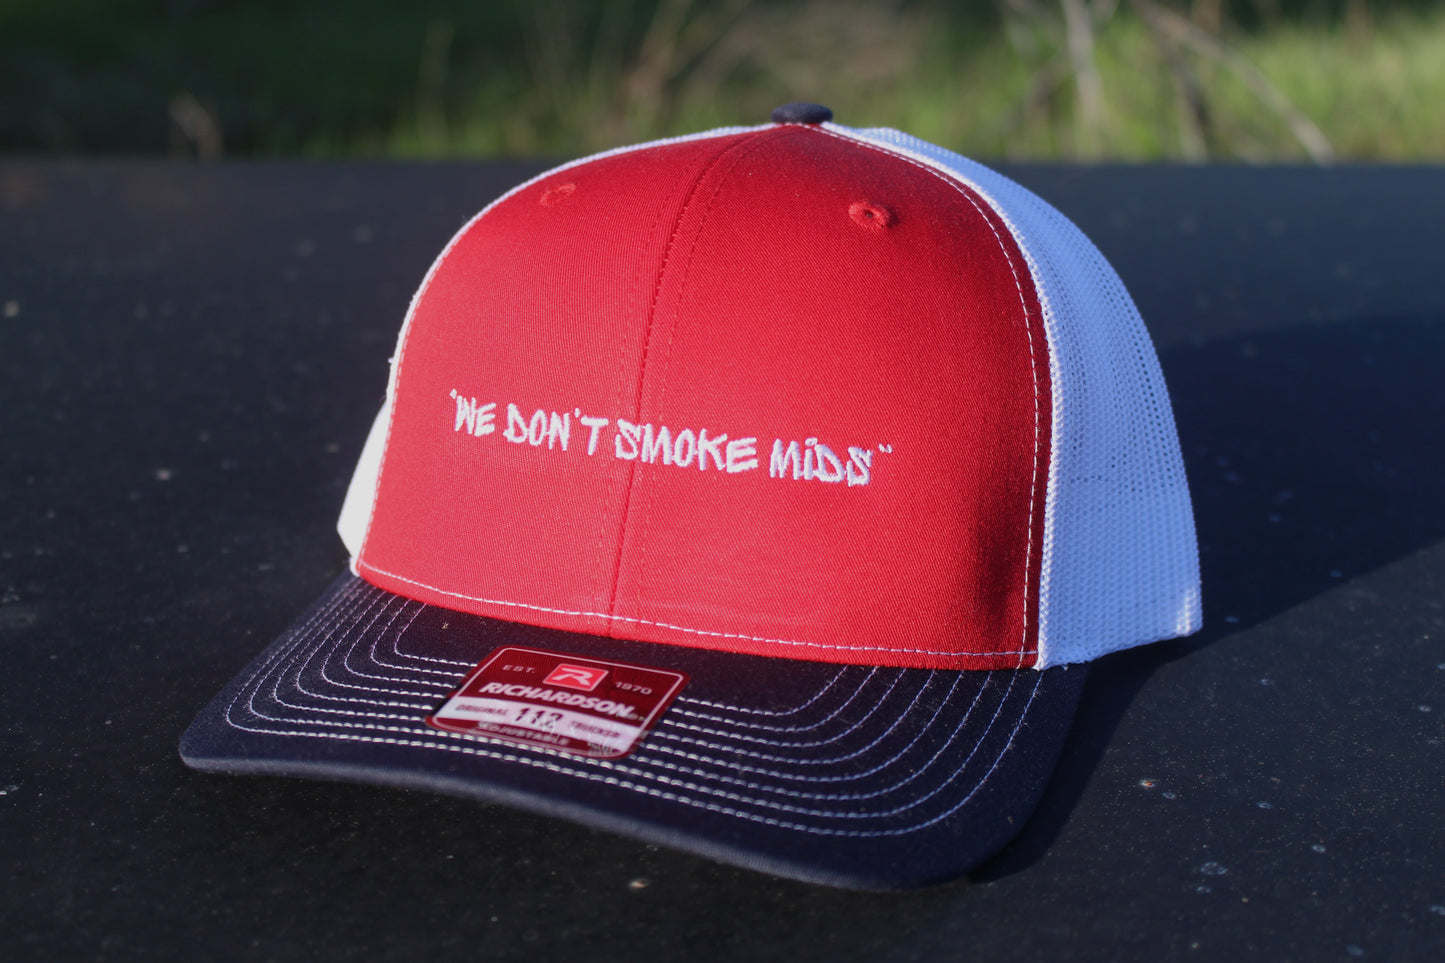 "We Don't Smoke Mids" Trucker Hats